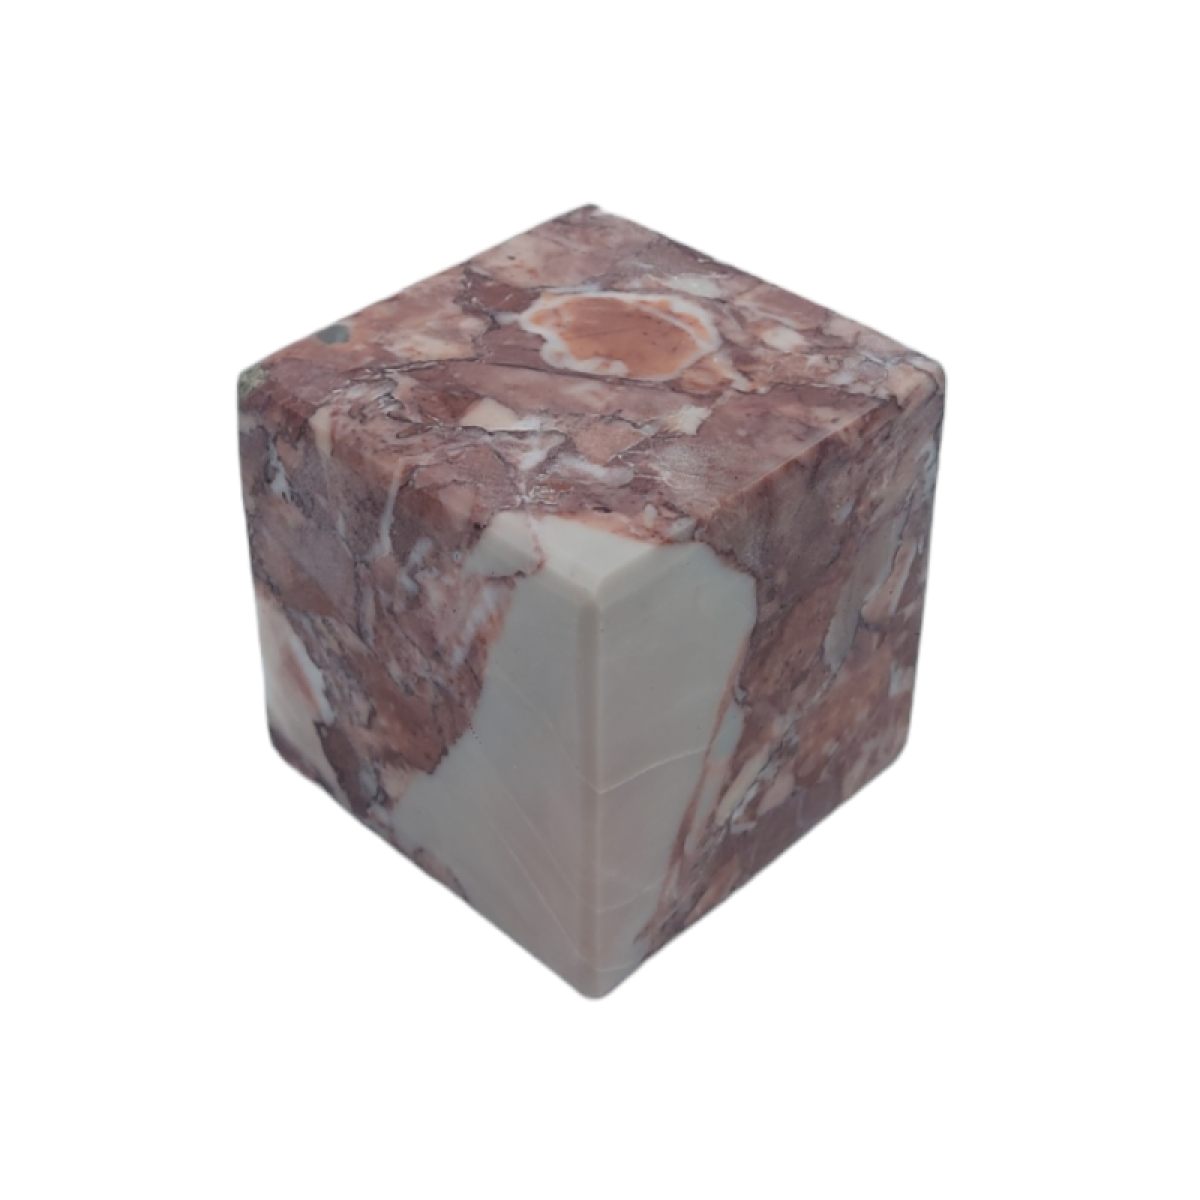 cubo-würfel-cube-sassalbo-marmo-marmor